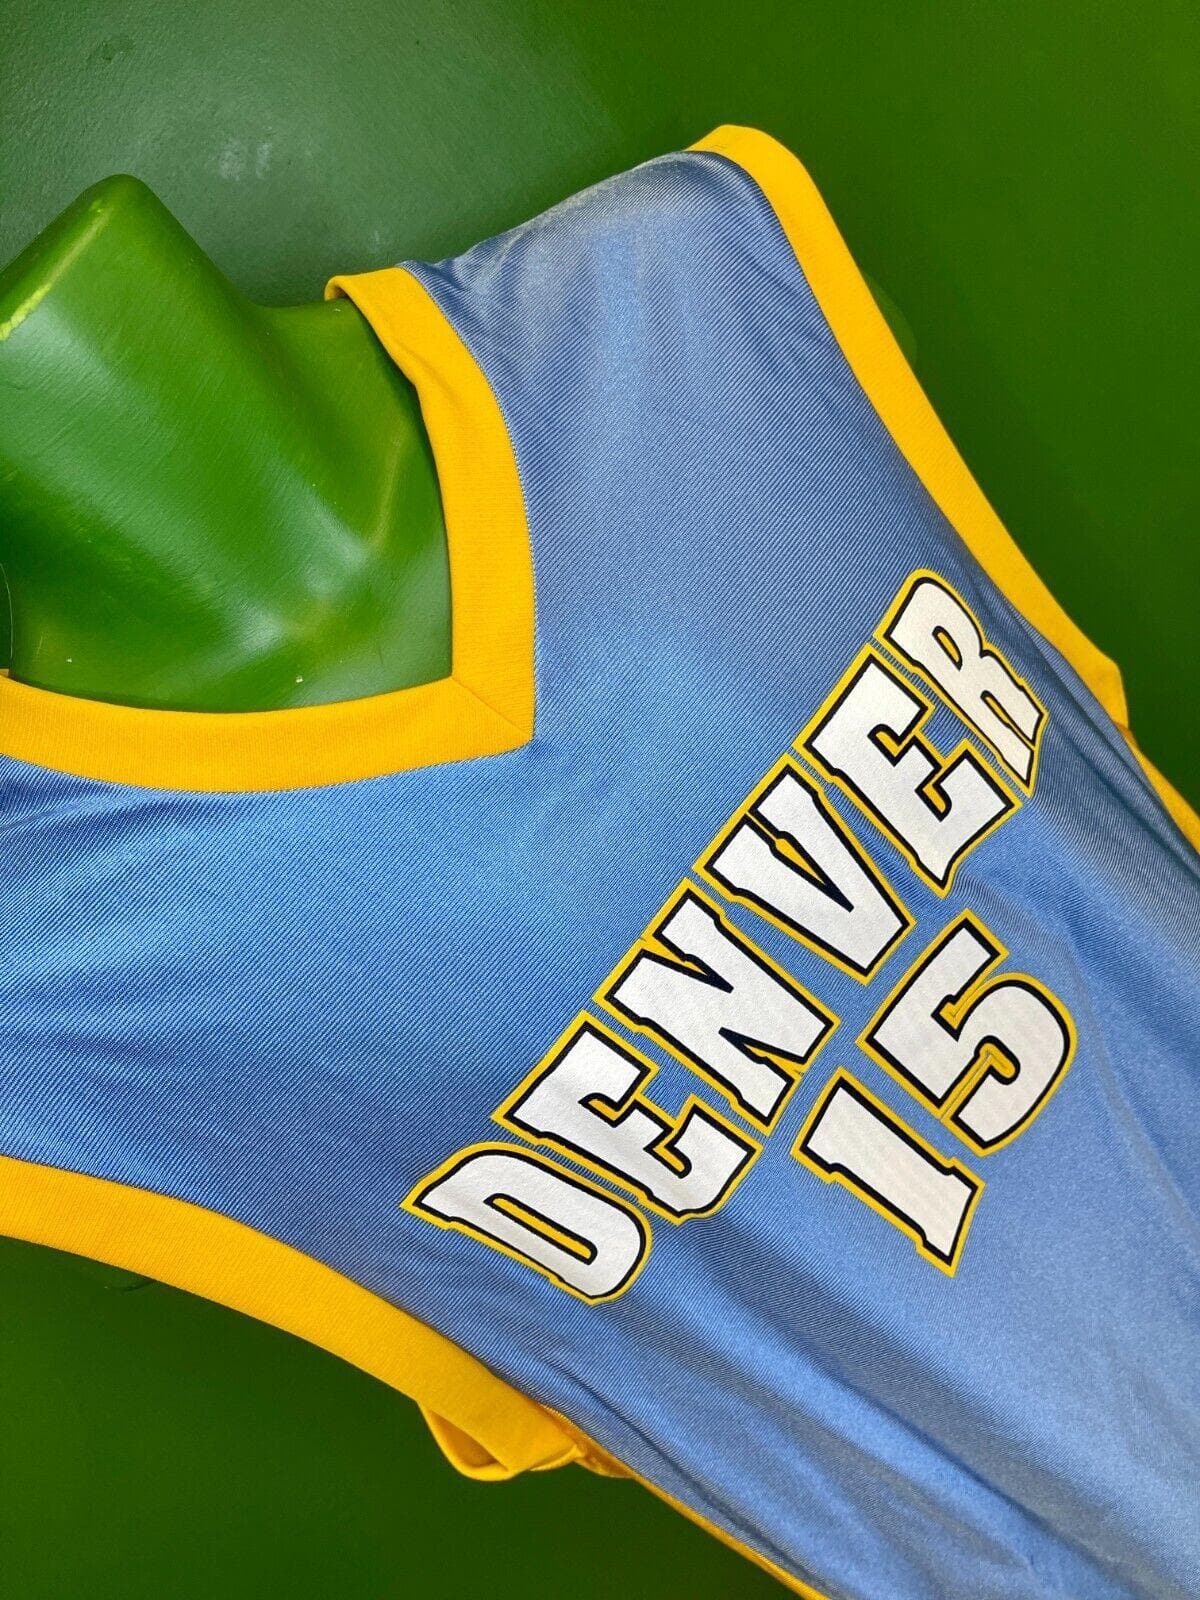 NBA Denver Nuggets Carmelo Anthony #15 Basketball Jersey Men's Medium 42"